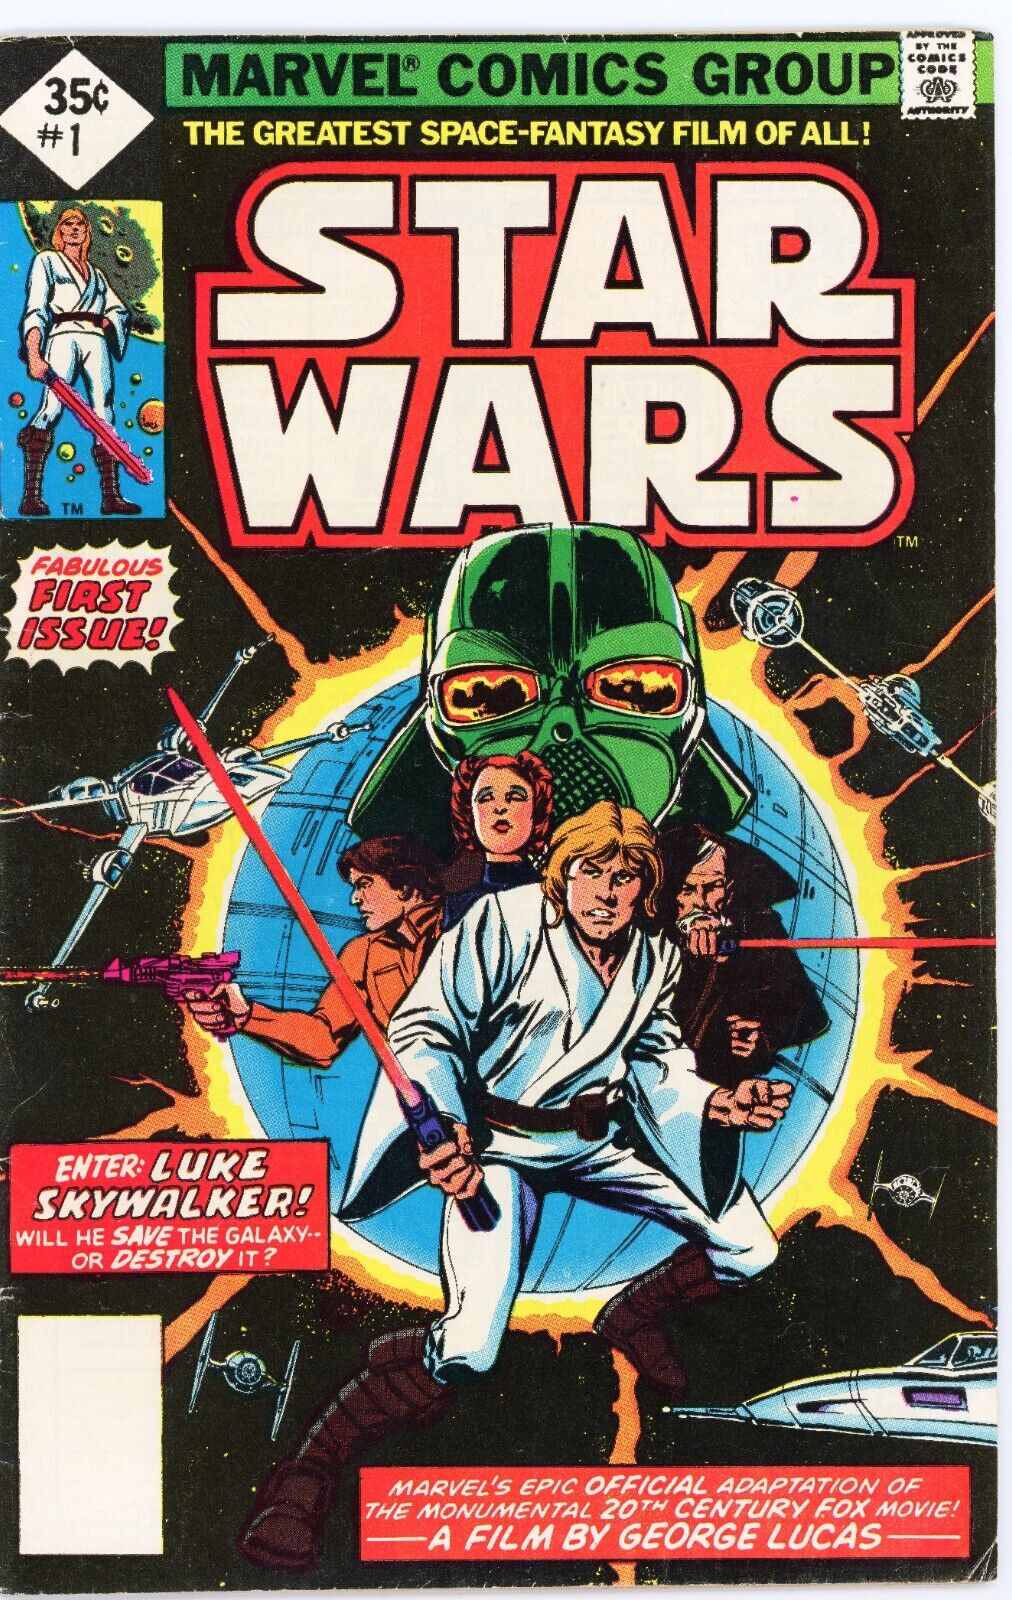 Star Wars, Vol. 1, No. 1 - July 1, 1977 Comic Book